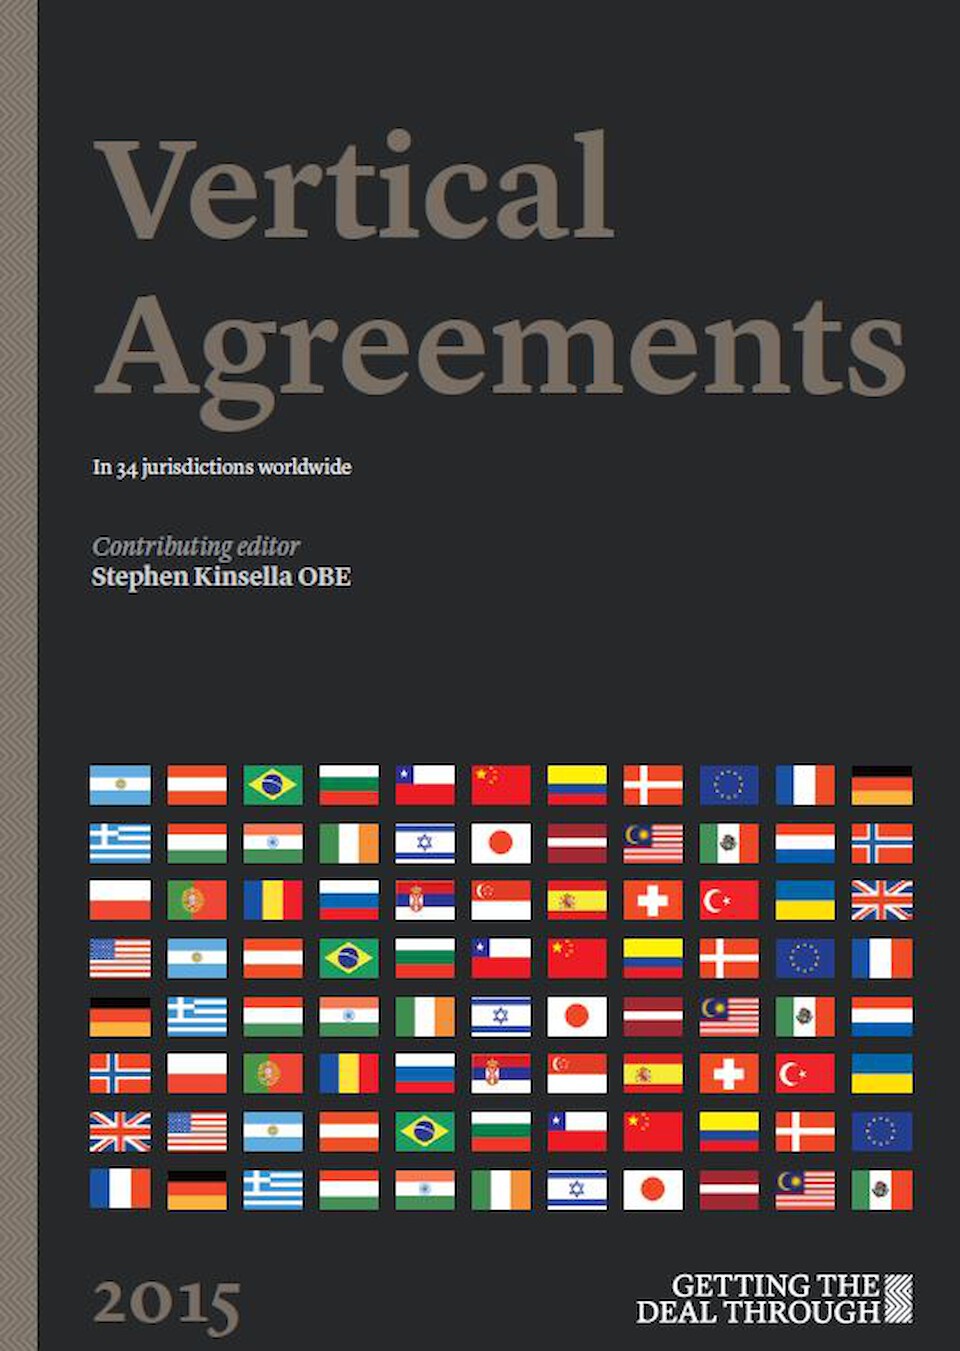 Vertical Agreements 2015 – Bulgaria